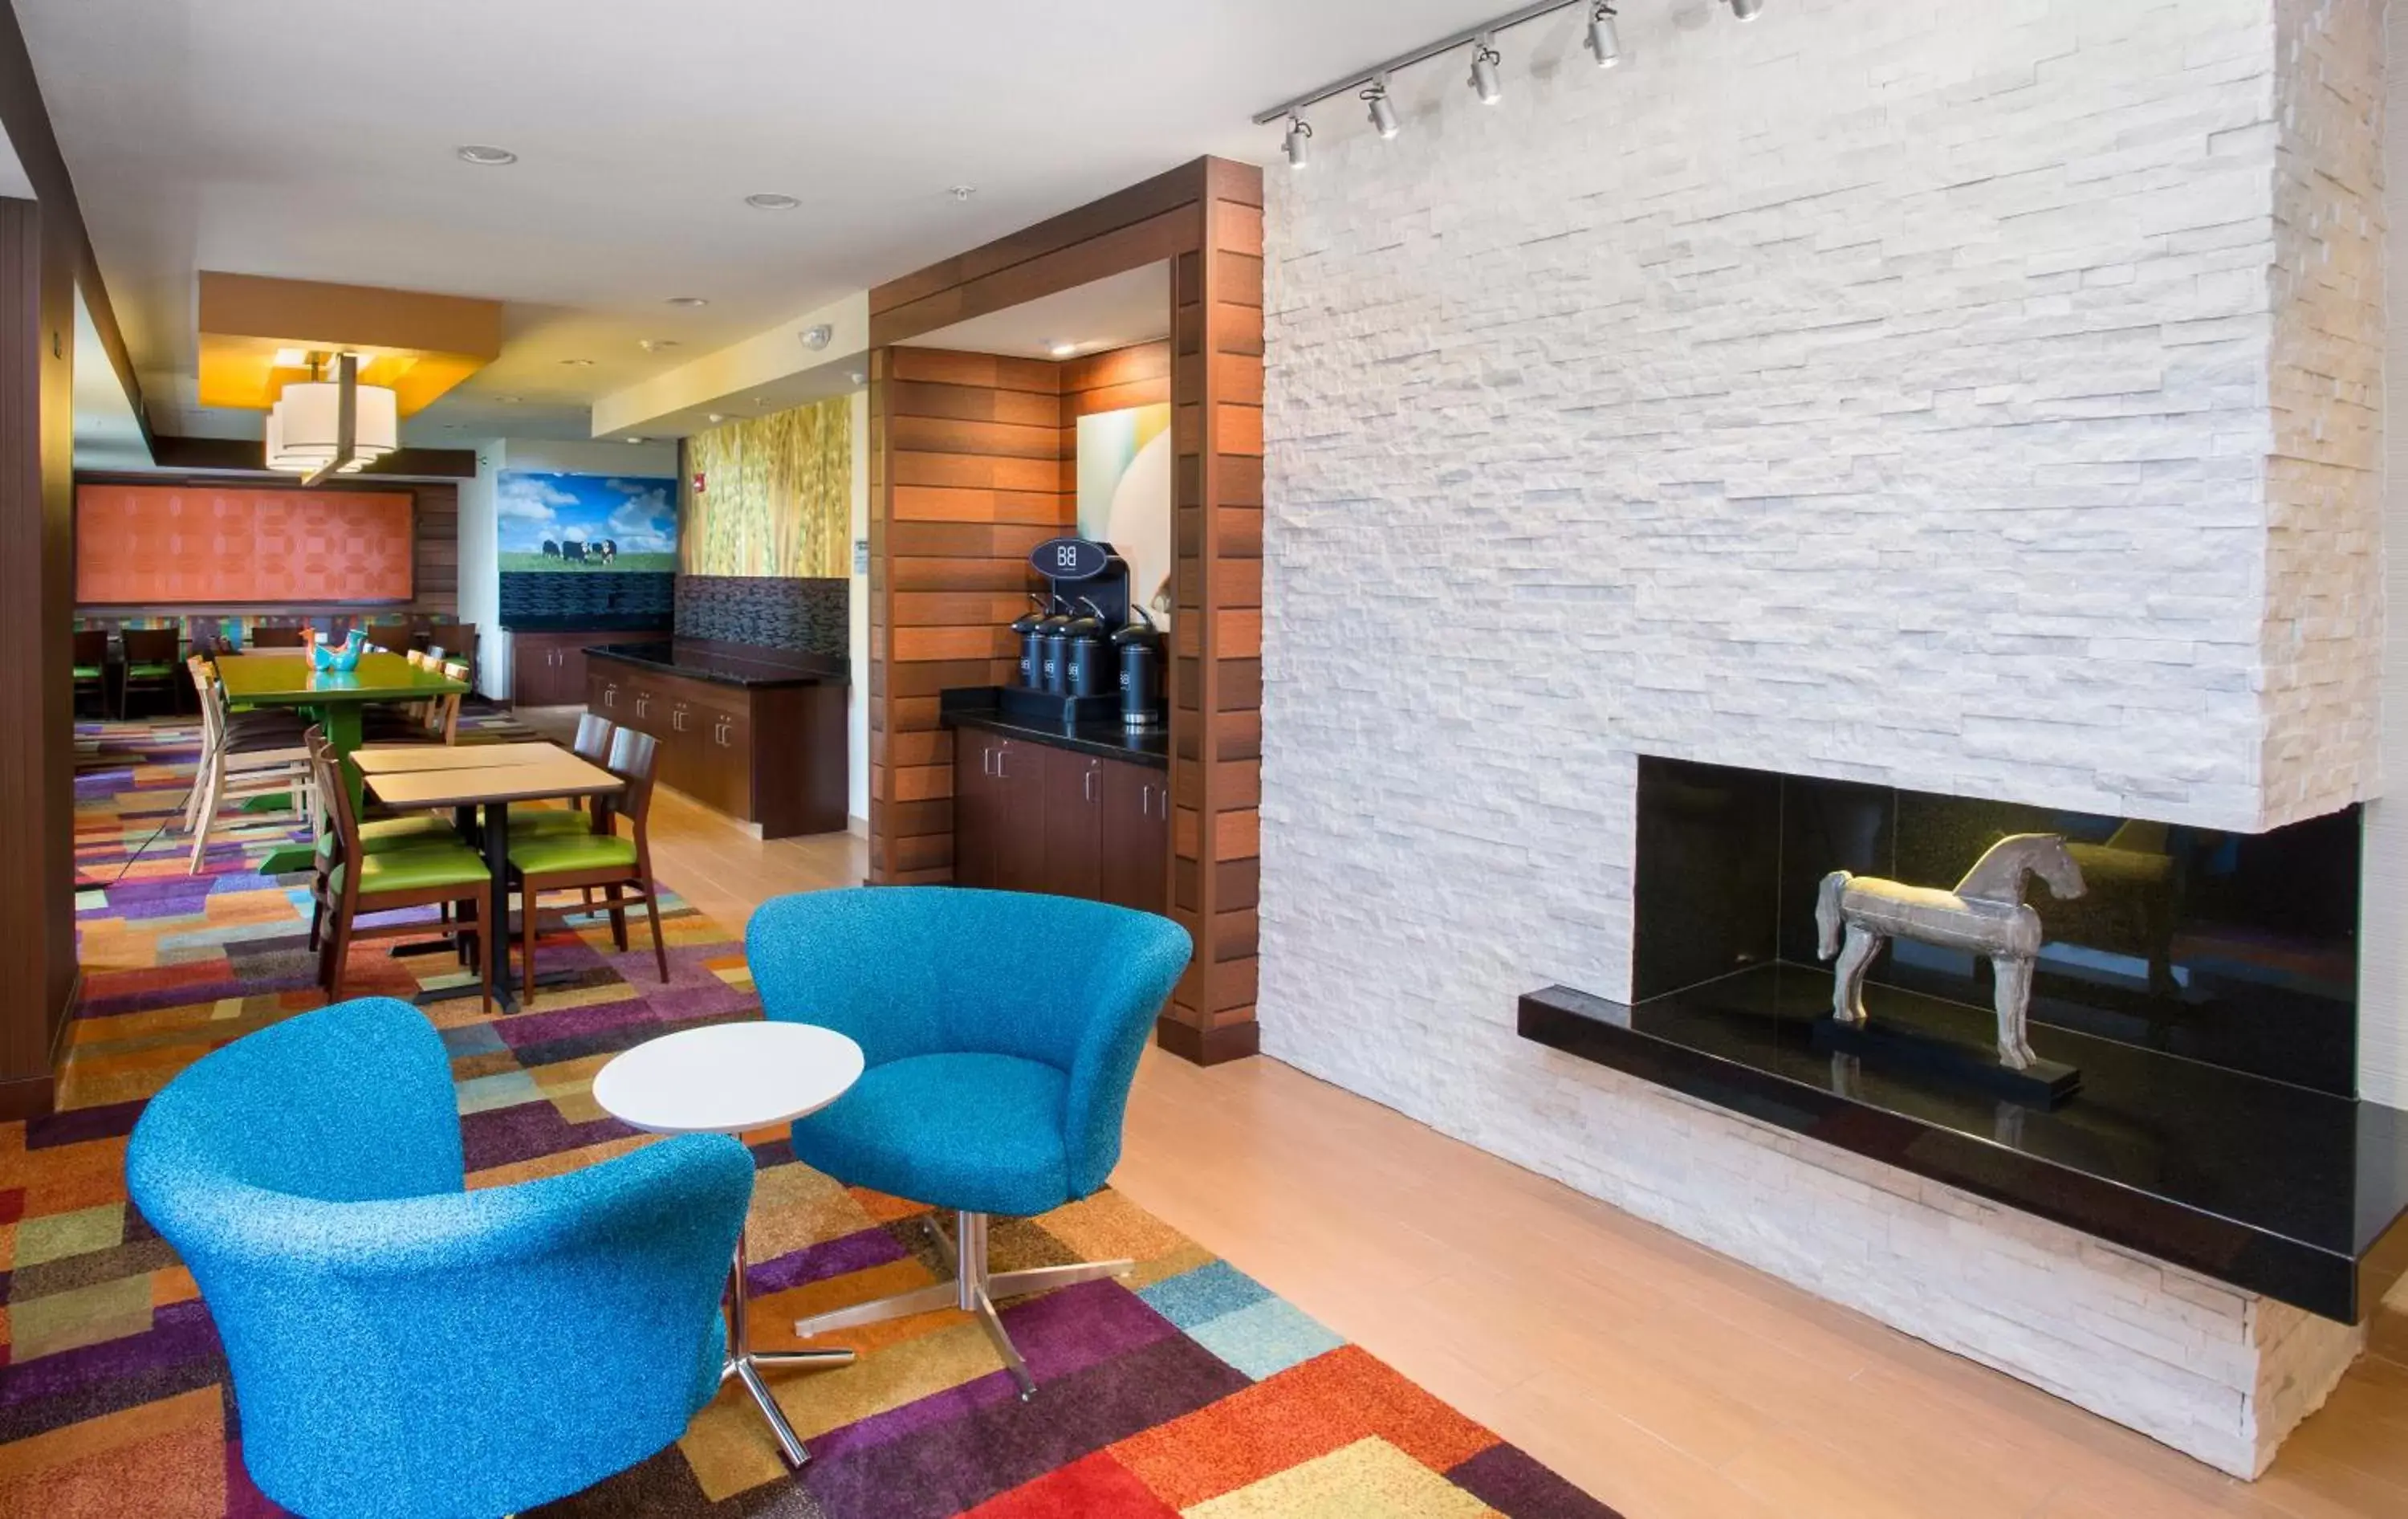 Lobby or reception in Fairfield Inn & Suites by Marriott Quincy